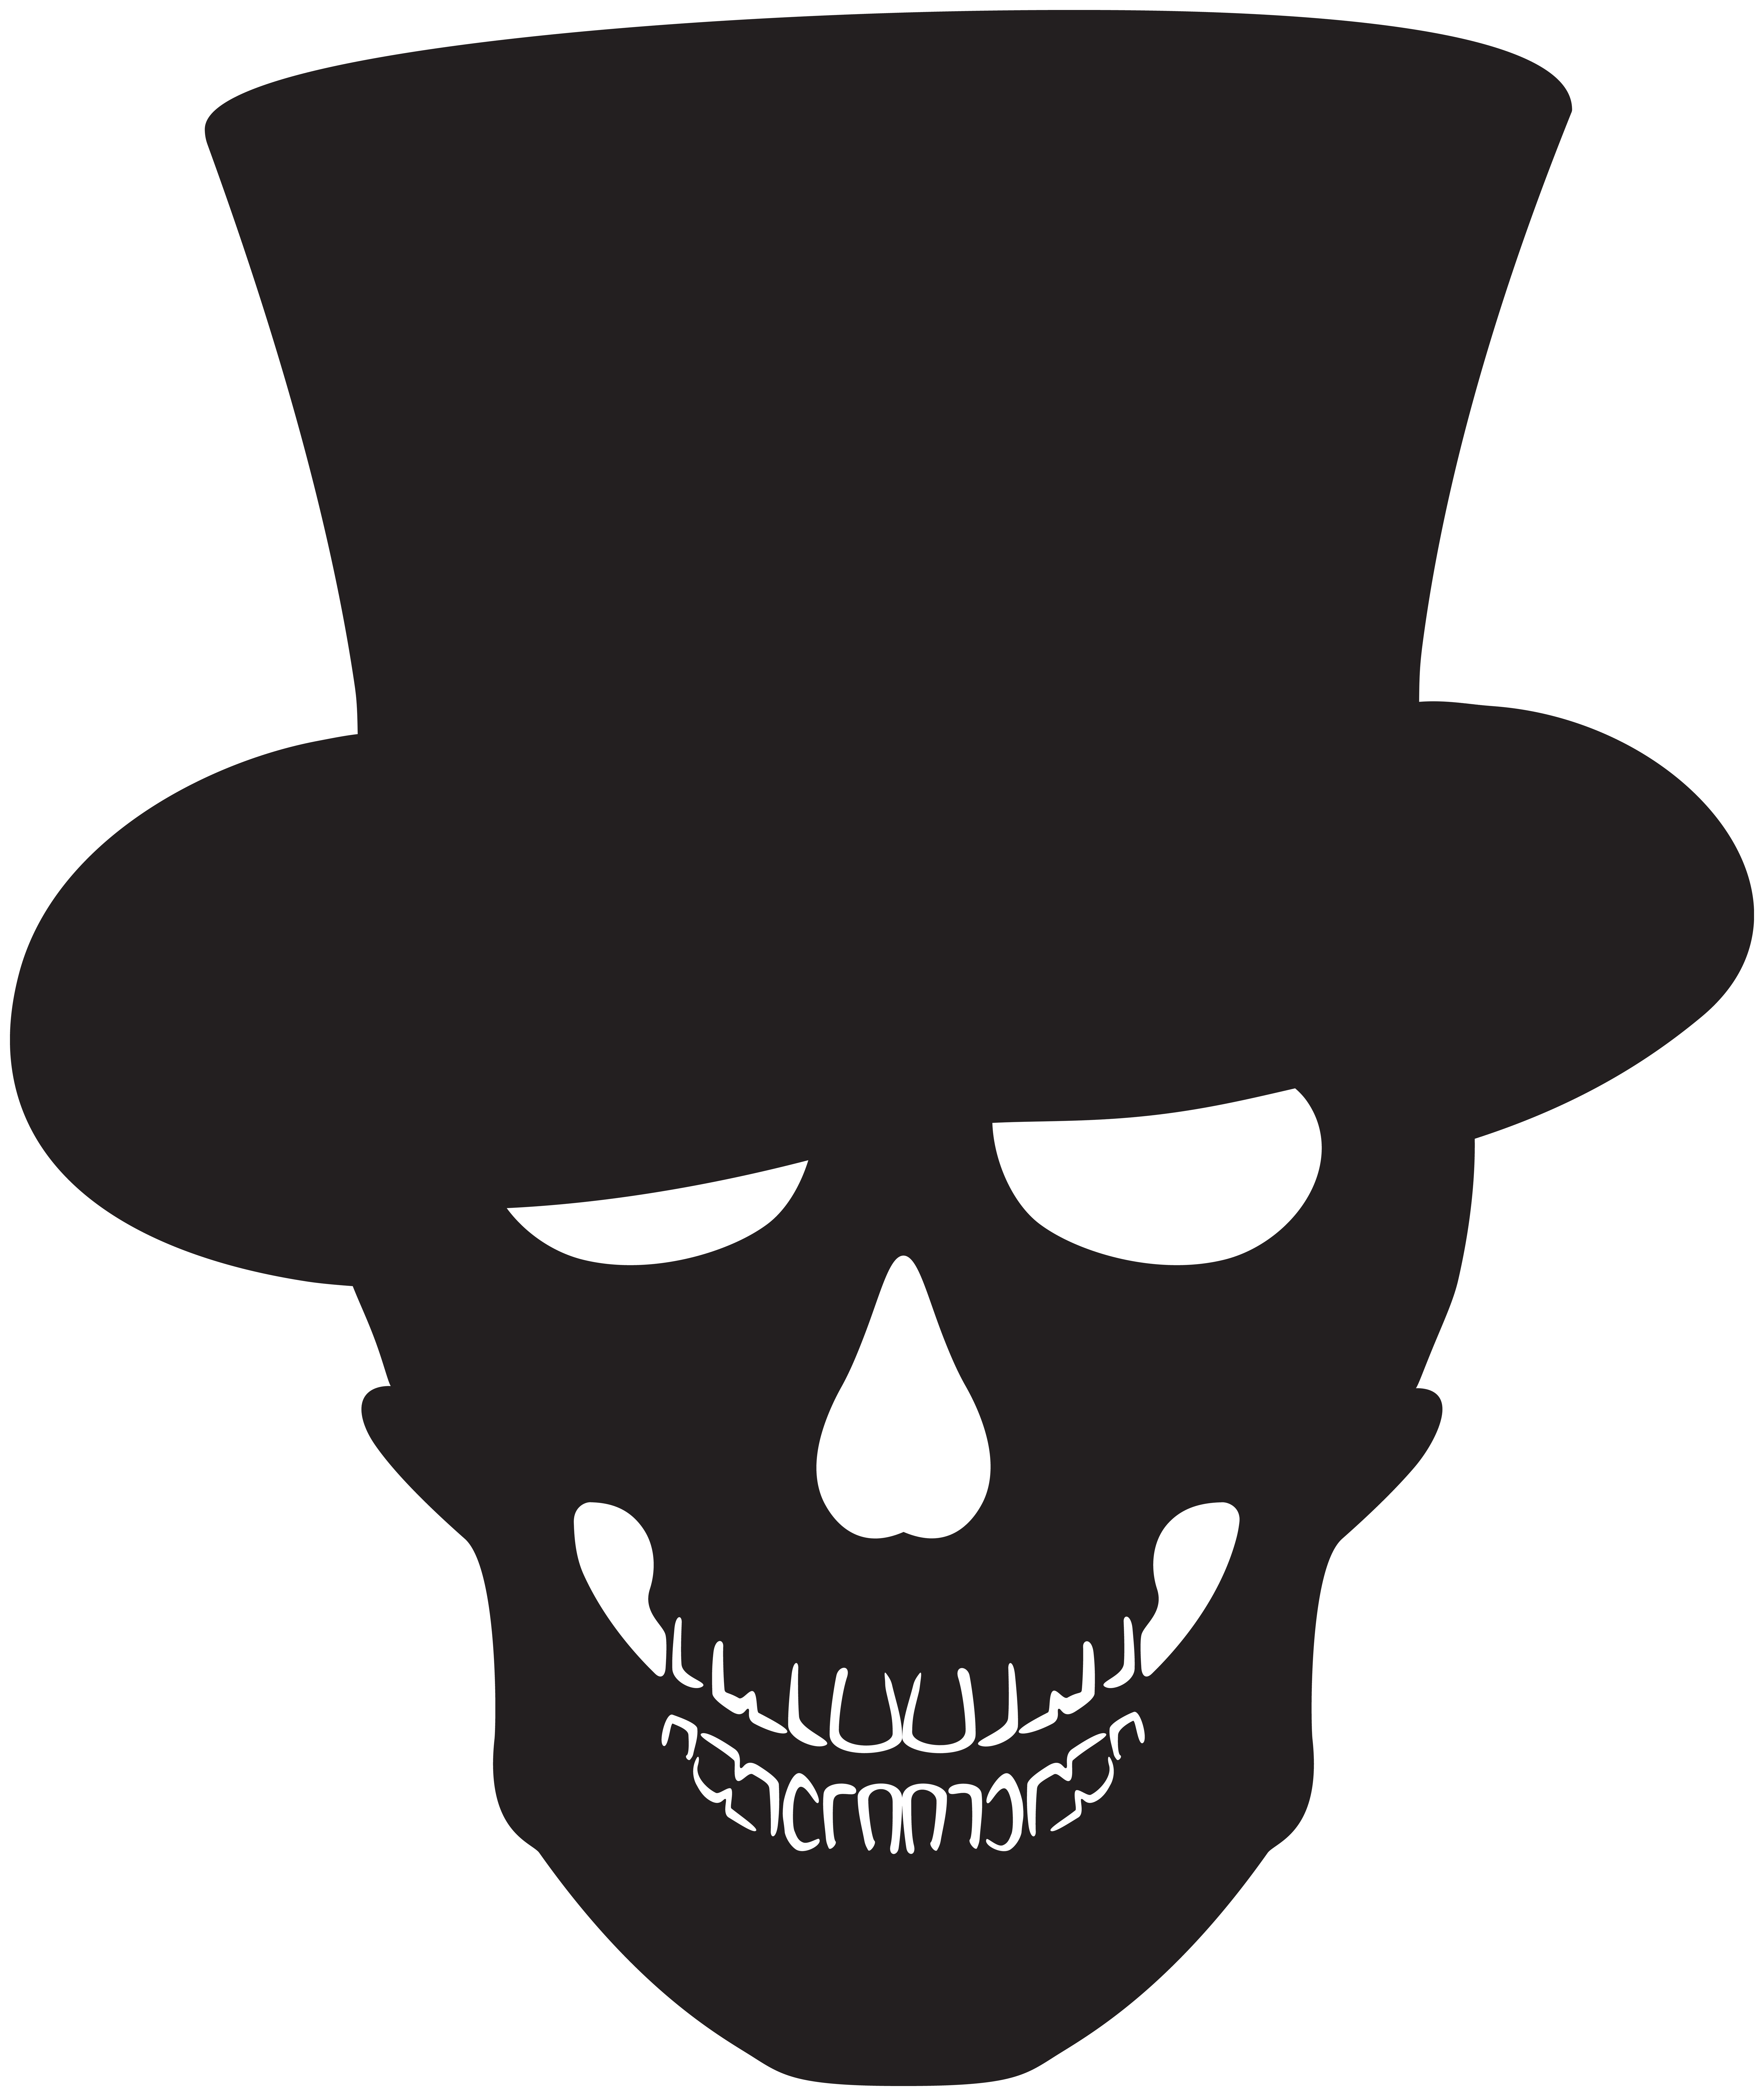 Halloween skull silhouette.